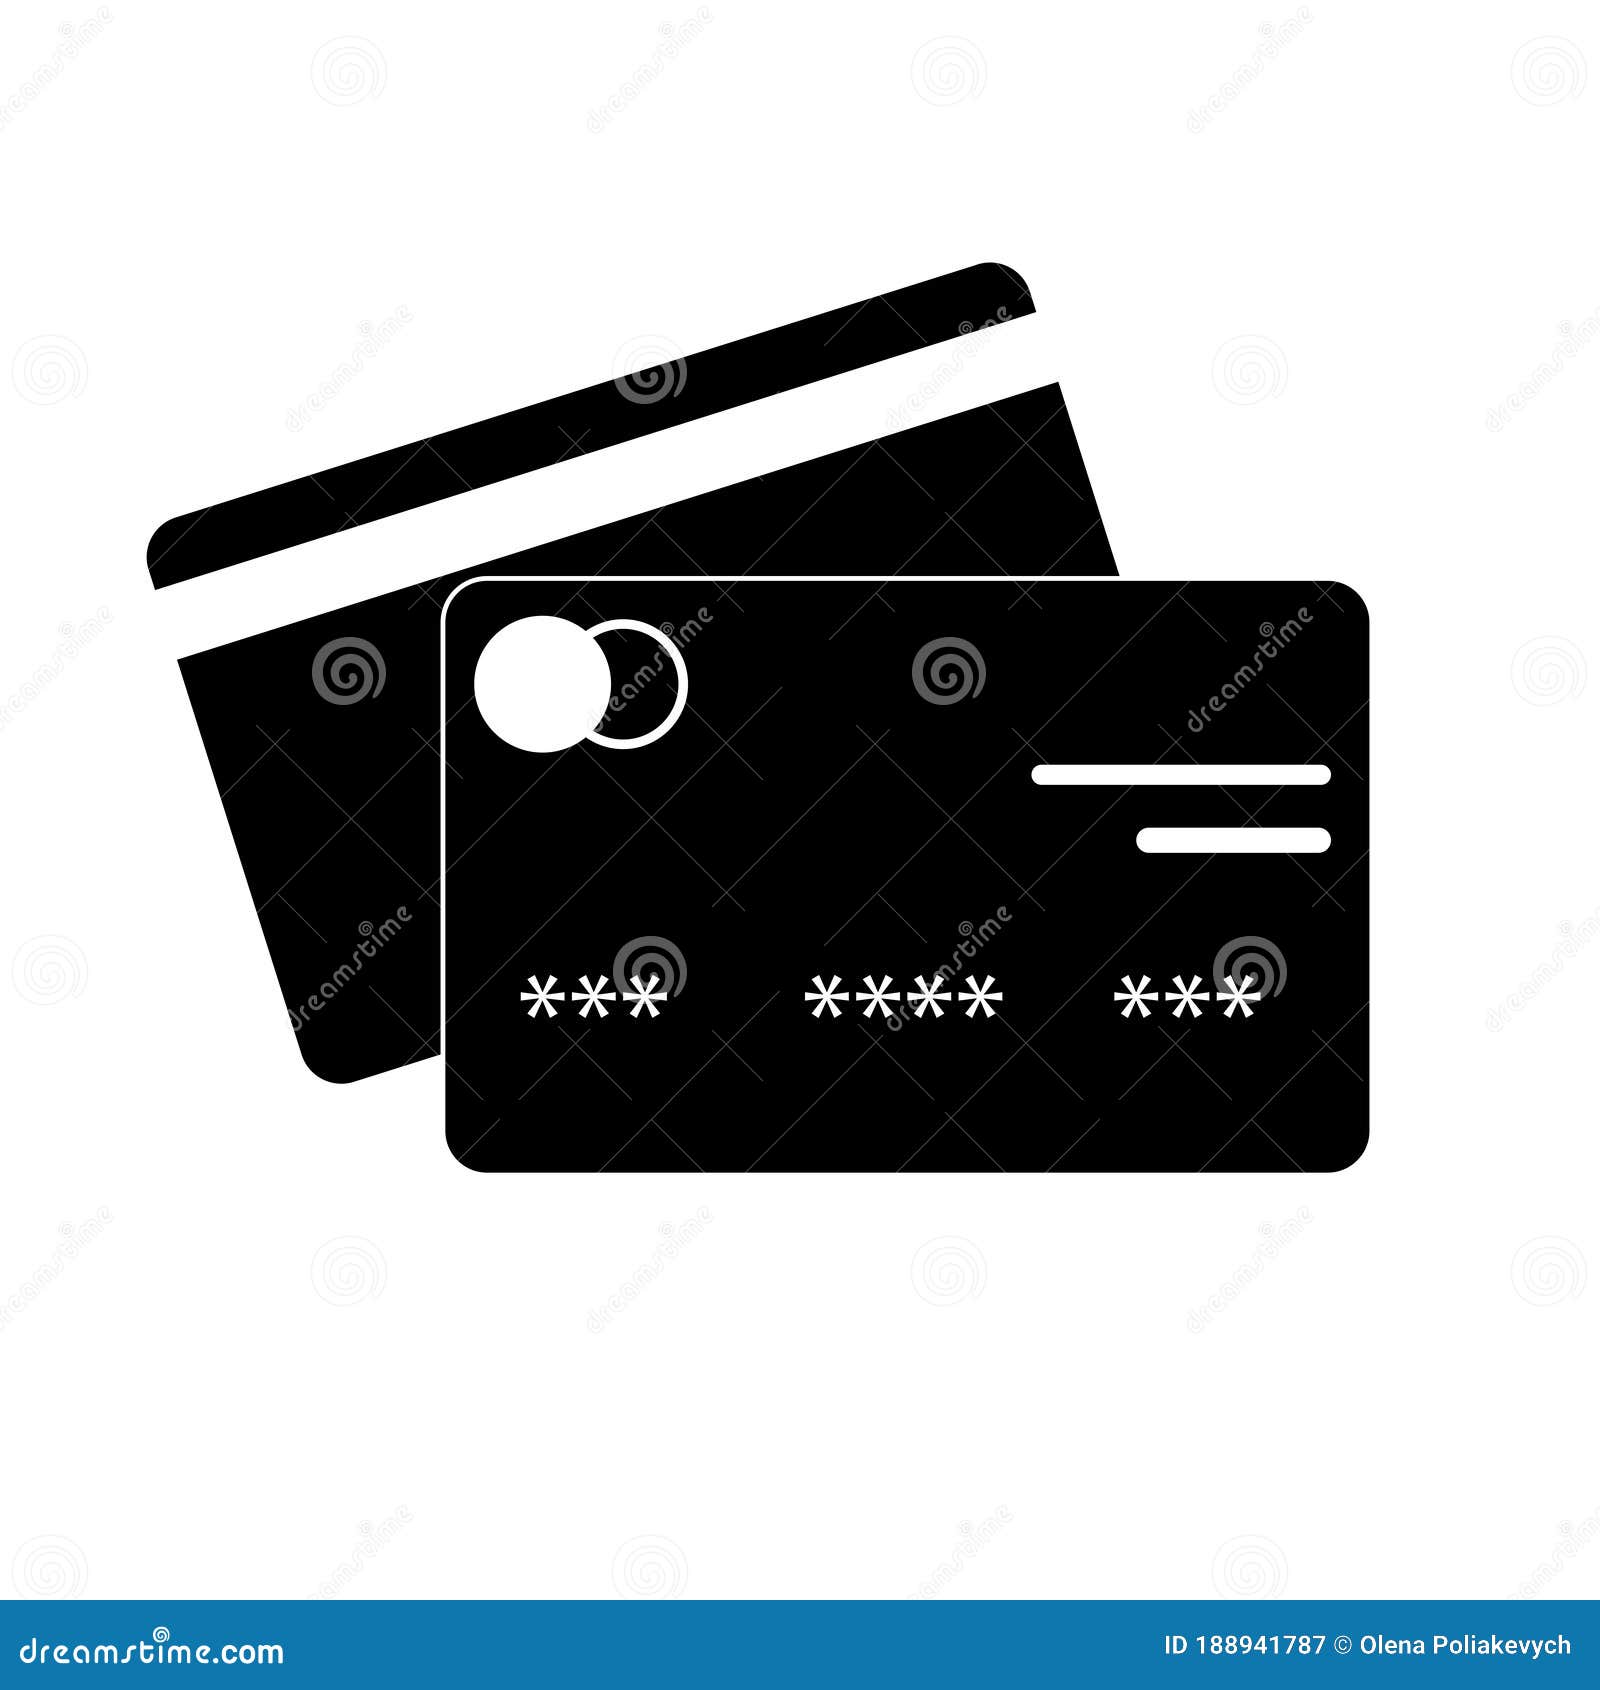 pnc bank credit card processing